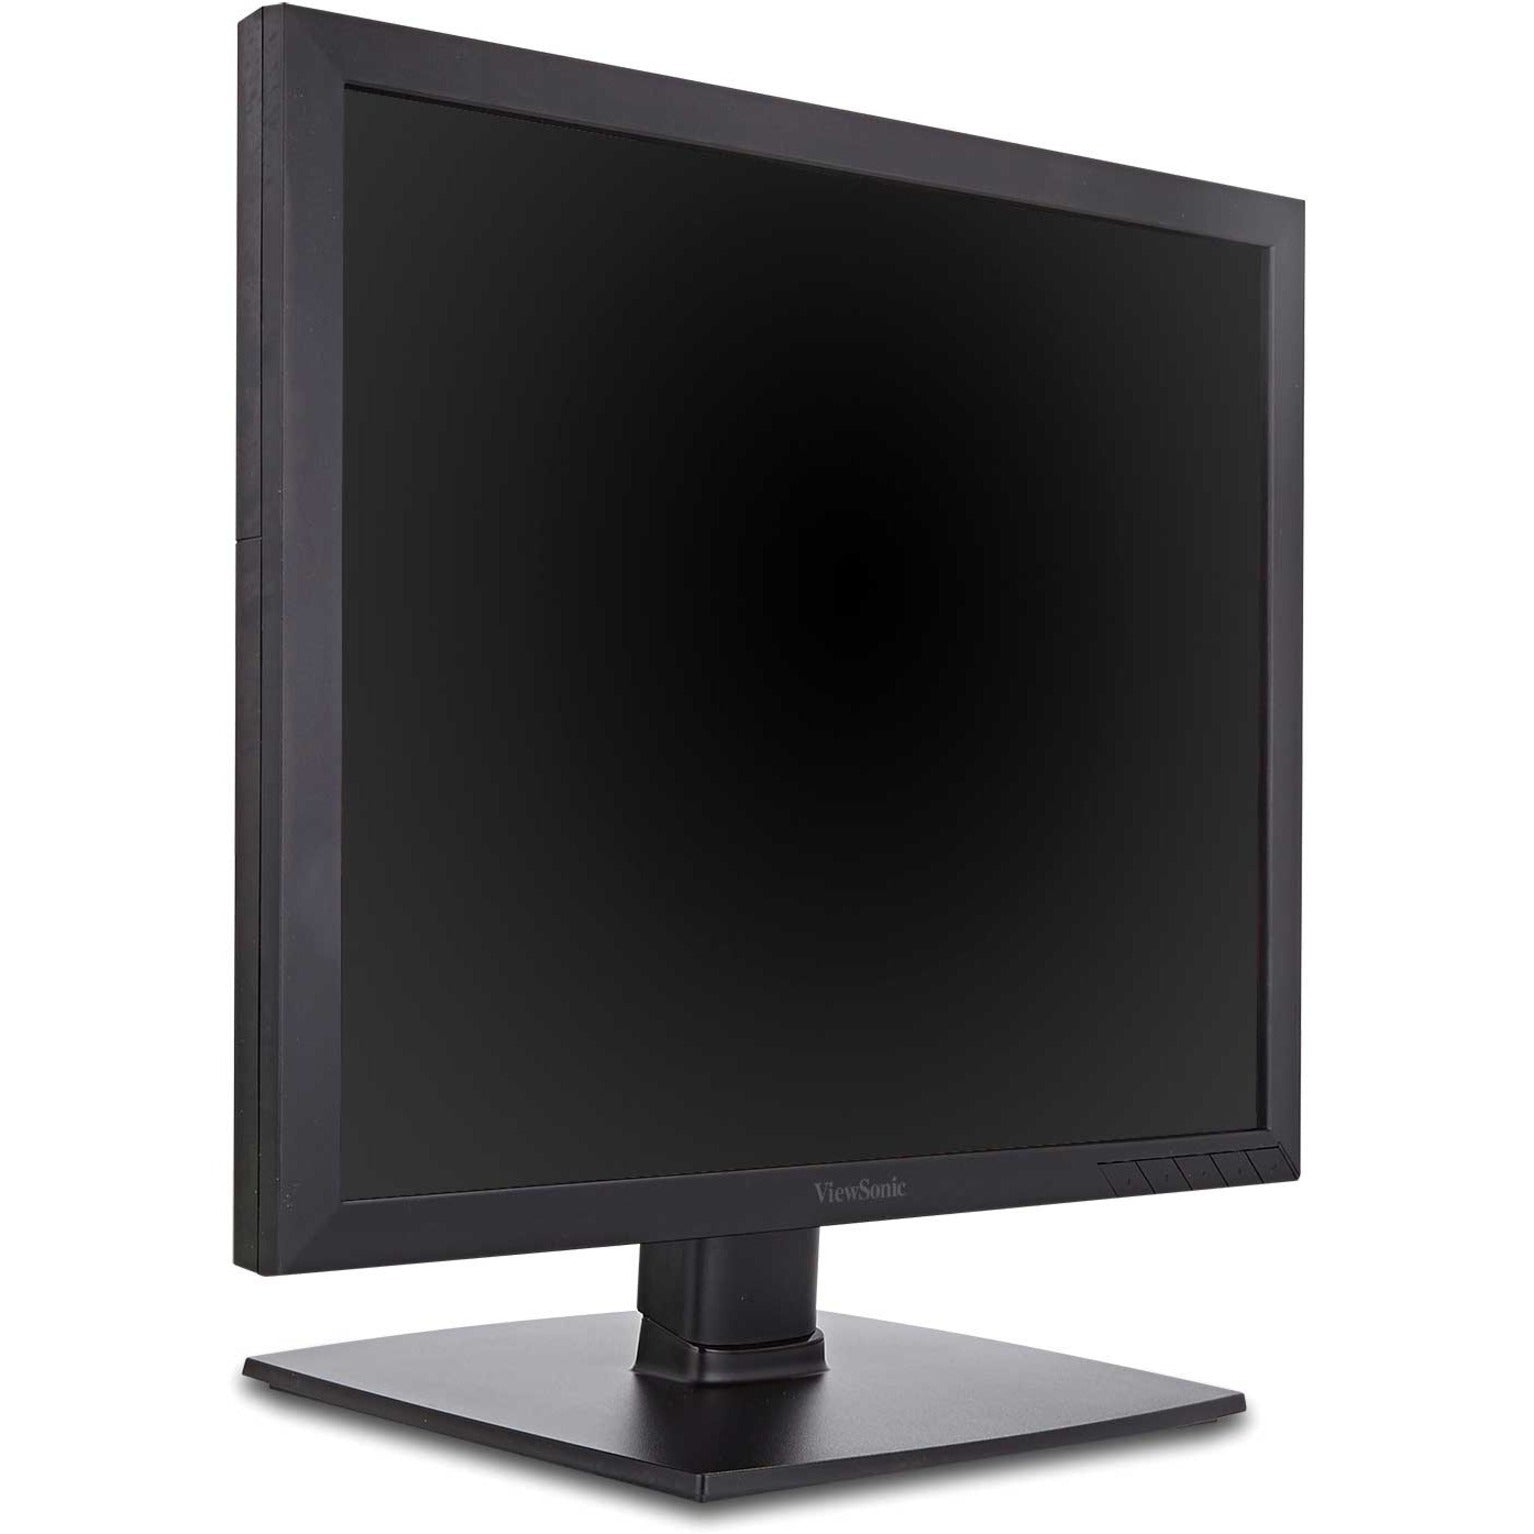 ViewSonic VA951S 19" LED Monitor, Anti-Glare, 250 Nit Brightness, 20,000,000:1 Contrast Ratio